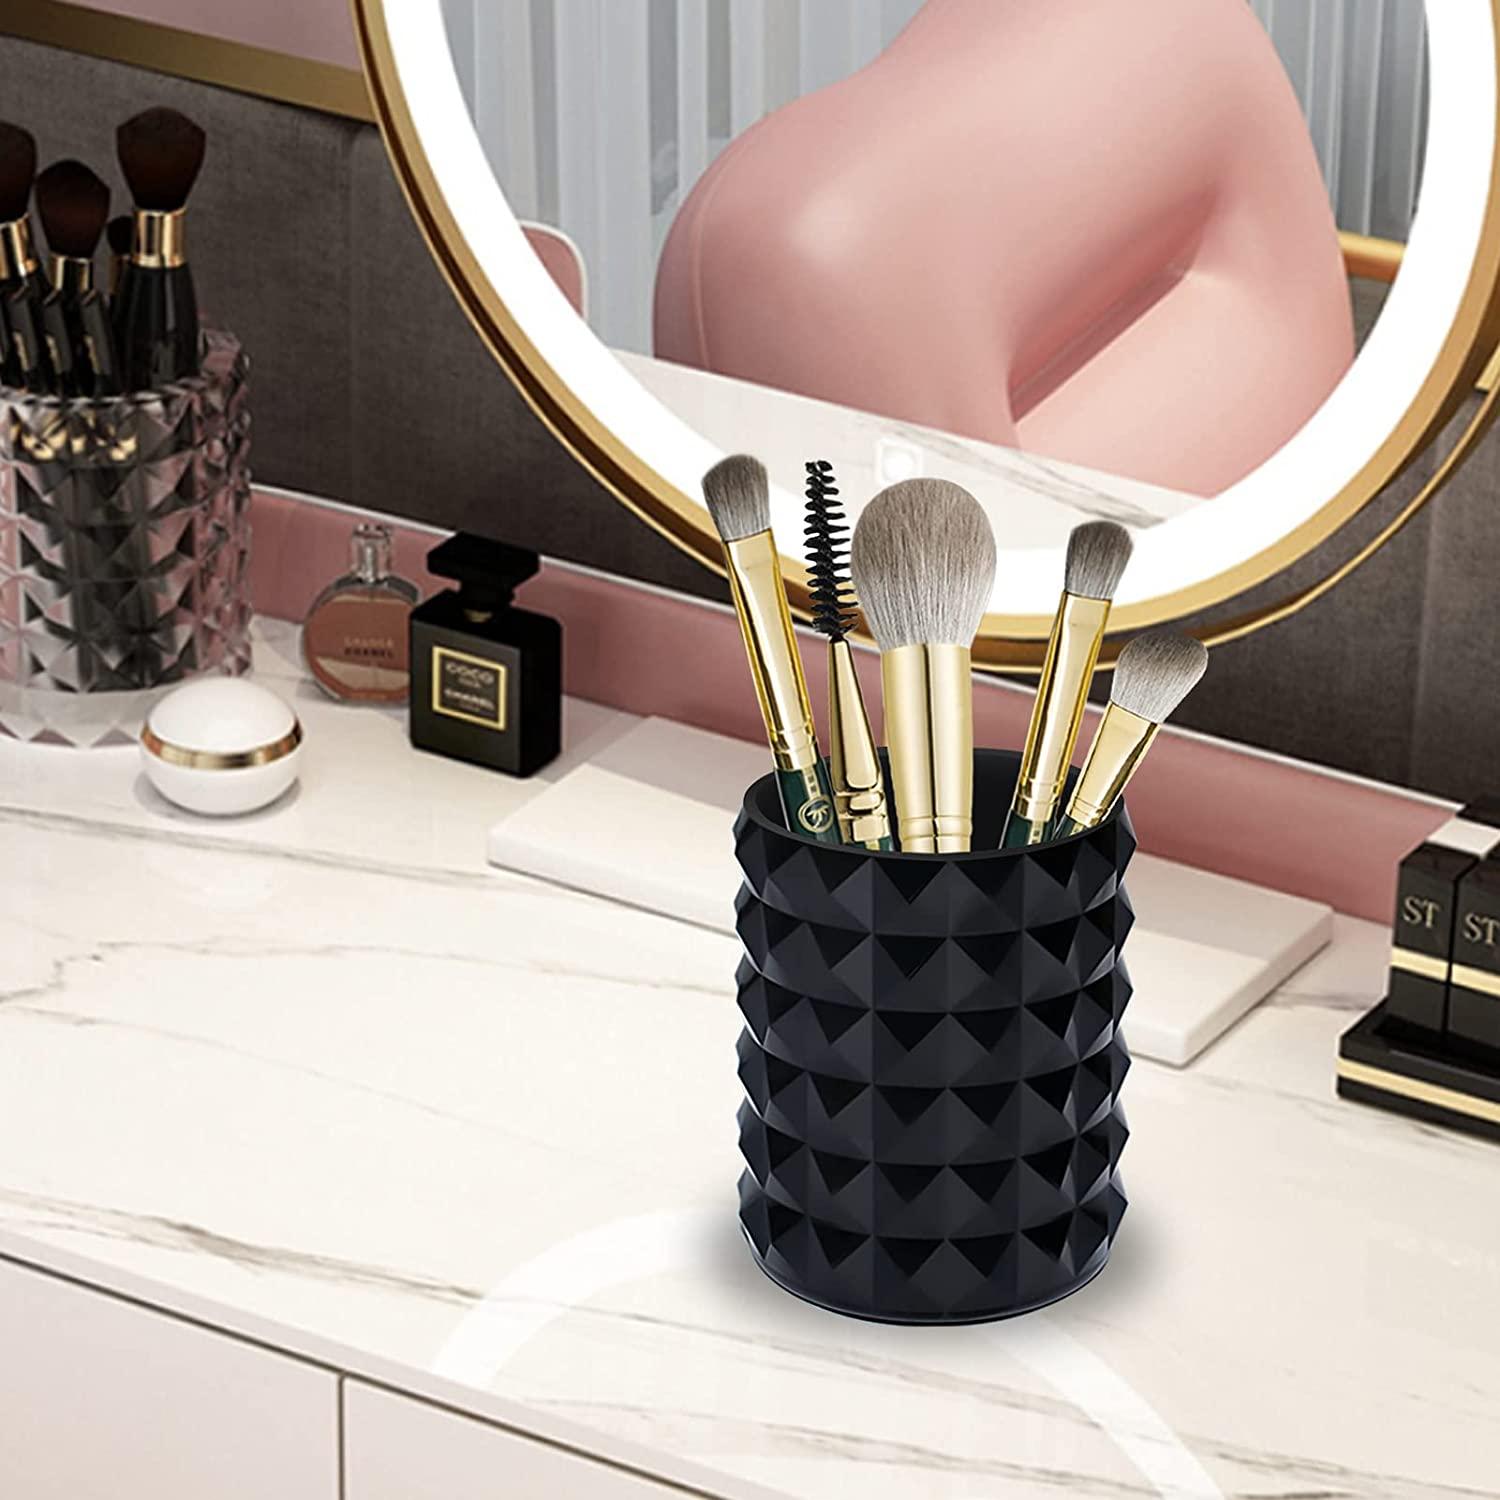 Better-way Makeup Brush Holder Decorative Make Up Brush Holder Ceramic Face Pen Holder Cute Stand Cosmetics Holder Organizer Pencil Cup Ceramic (Black Collar)